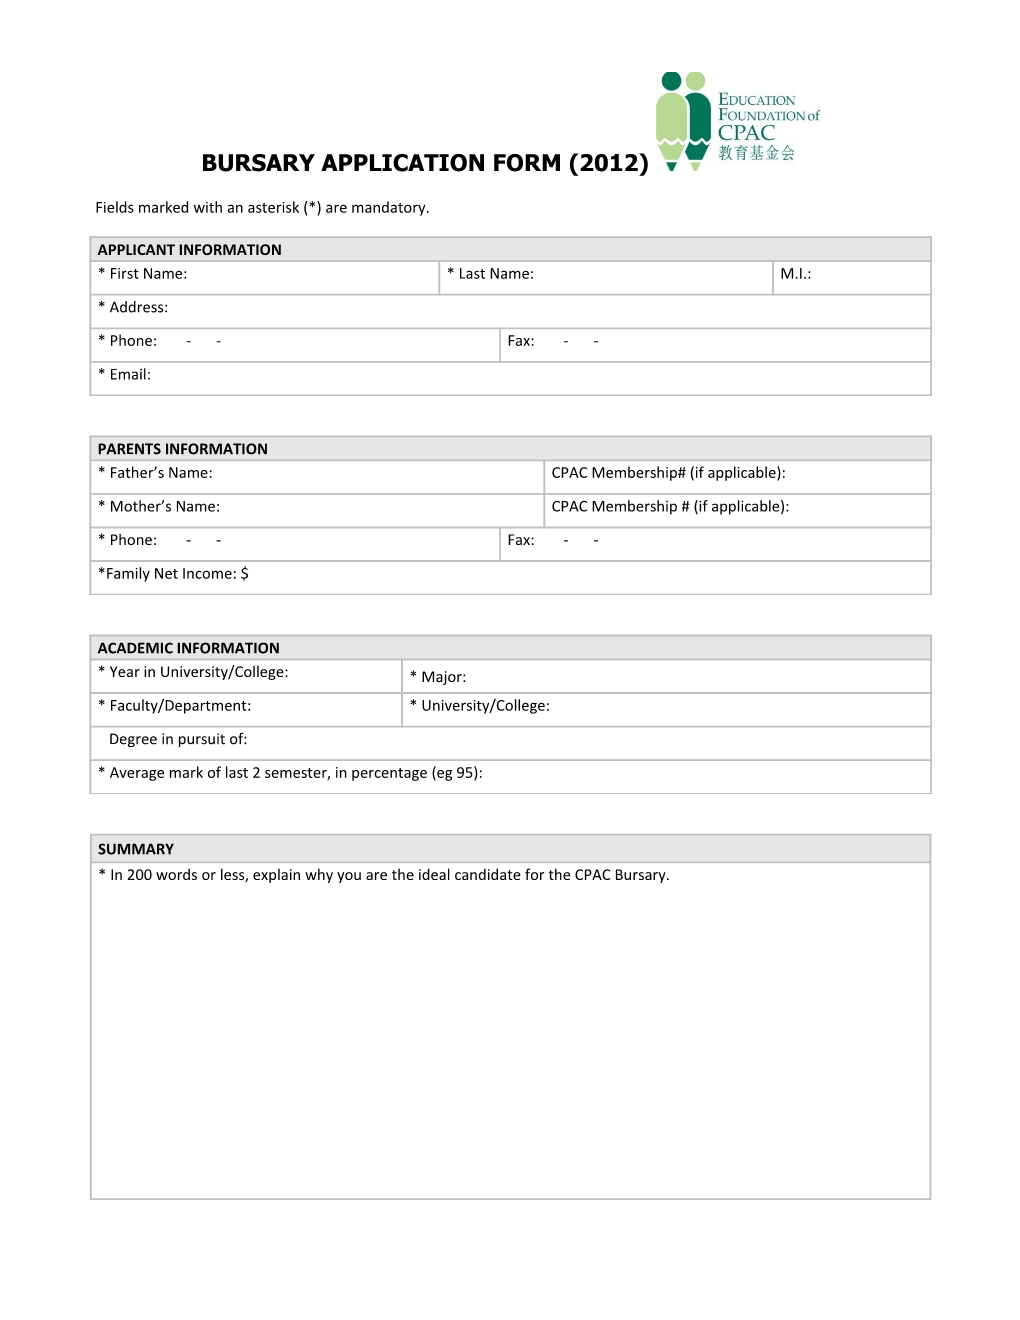 CPAC Bursary Application Form